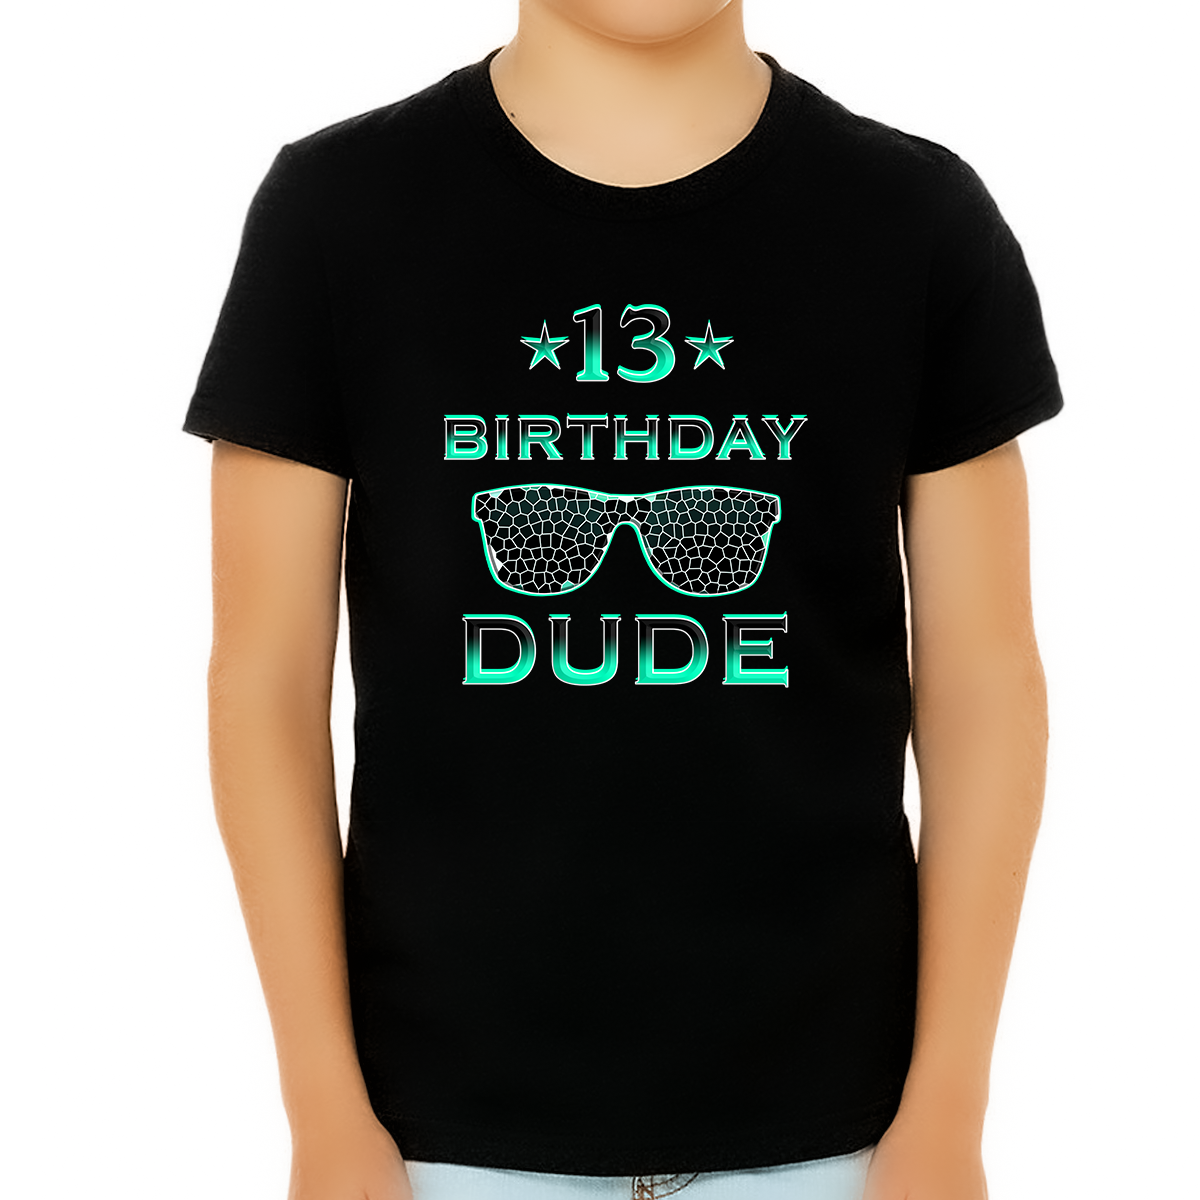 13th Birthday Shirt Boy - Perfect Dude Shirt - Perfect Dude Merchandise - Birthday Boy Shirt 13 - Fire Fit Designs